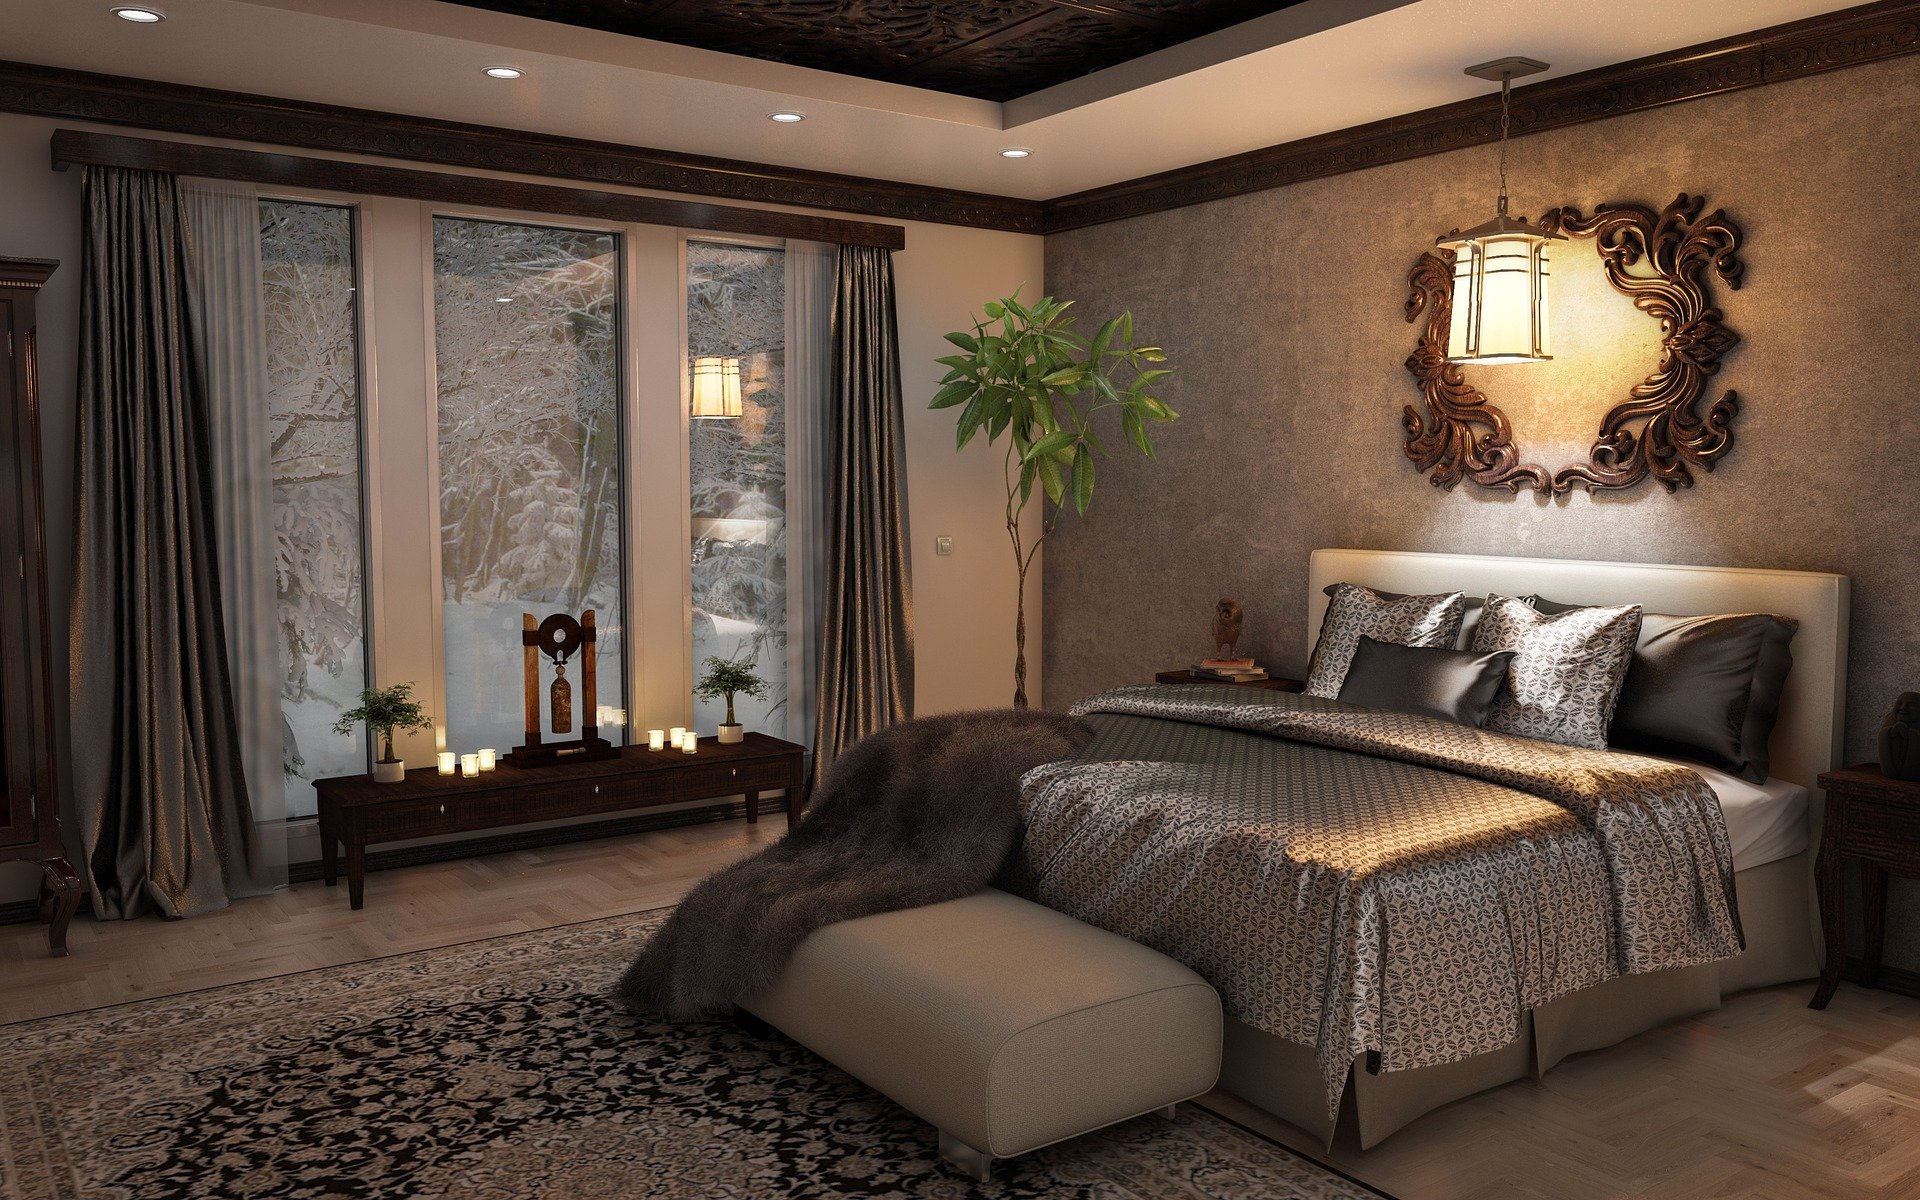 FabModula | Tips for Designing Bedroom